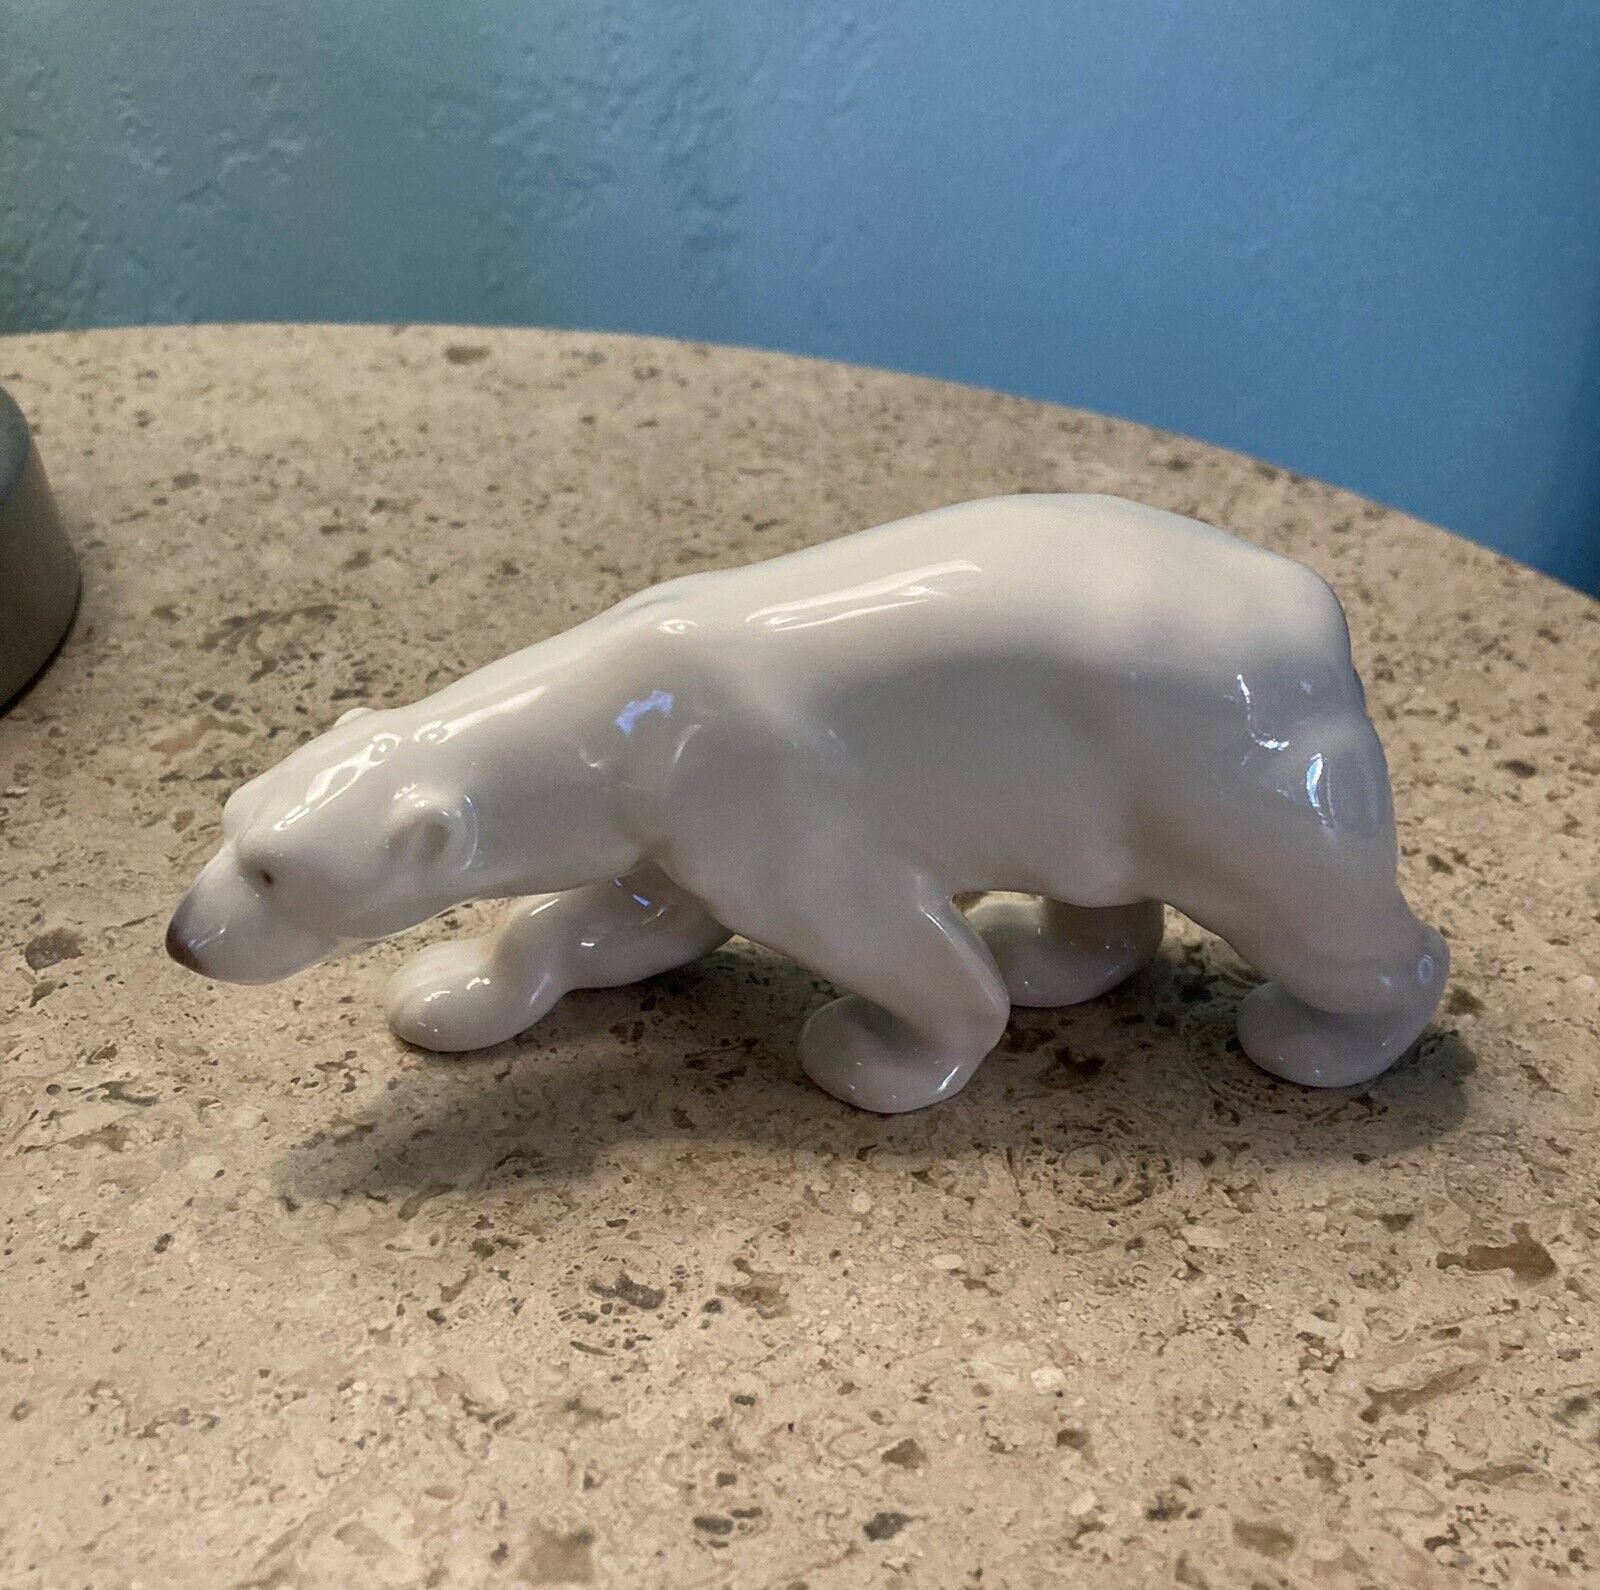 Polar Bear Walking-Bing & Grondahl Porcelain-figurine # 2218. Beautiful DENMARK